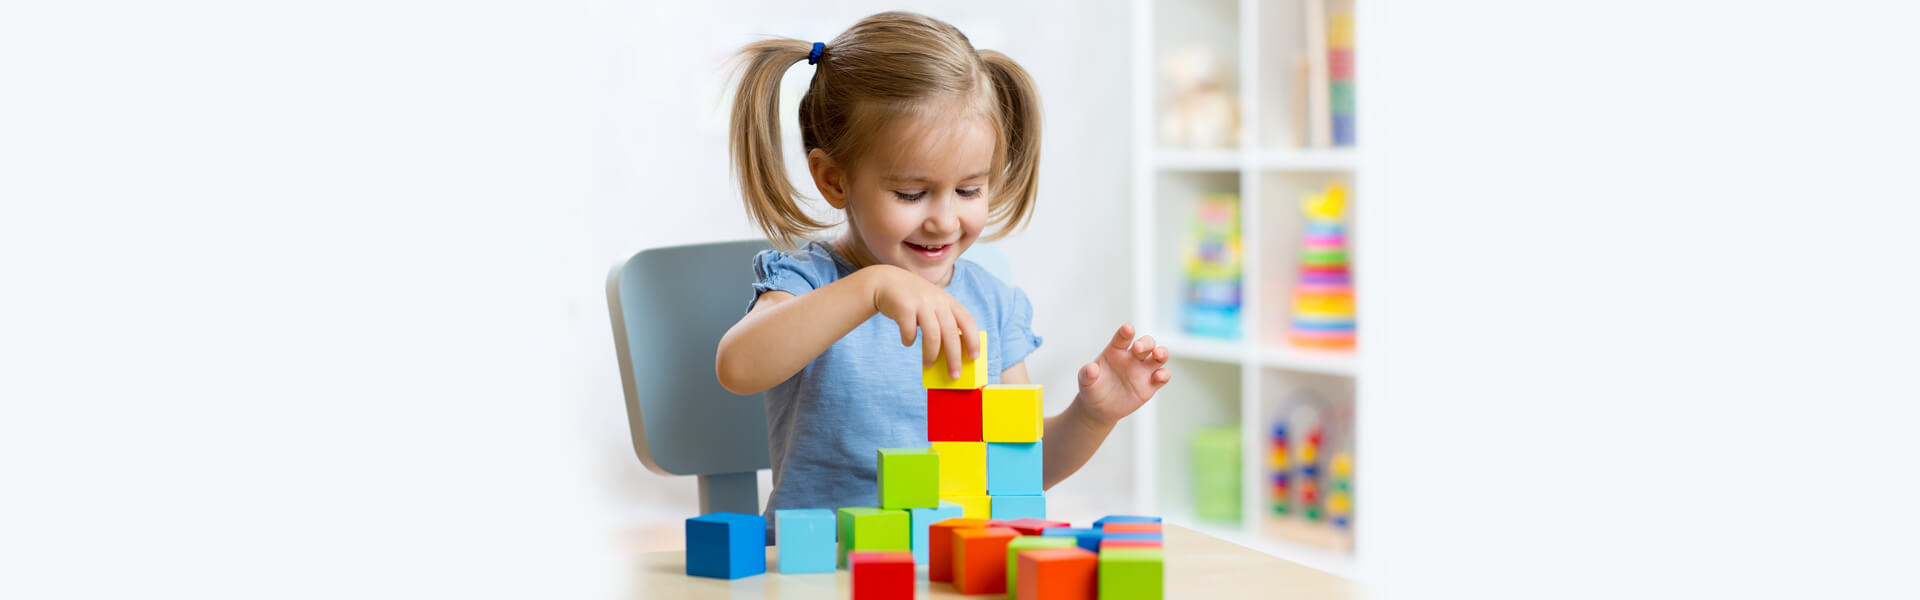 Montessori Education Around the World  Copy